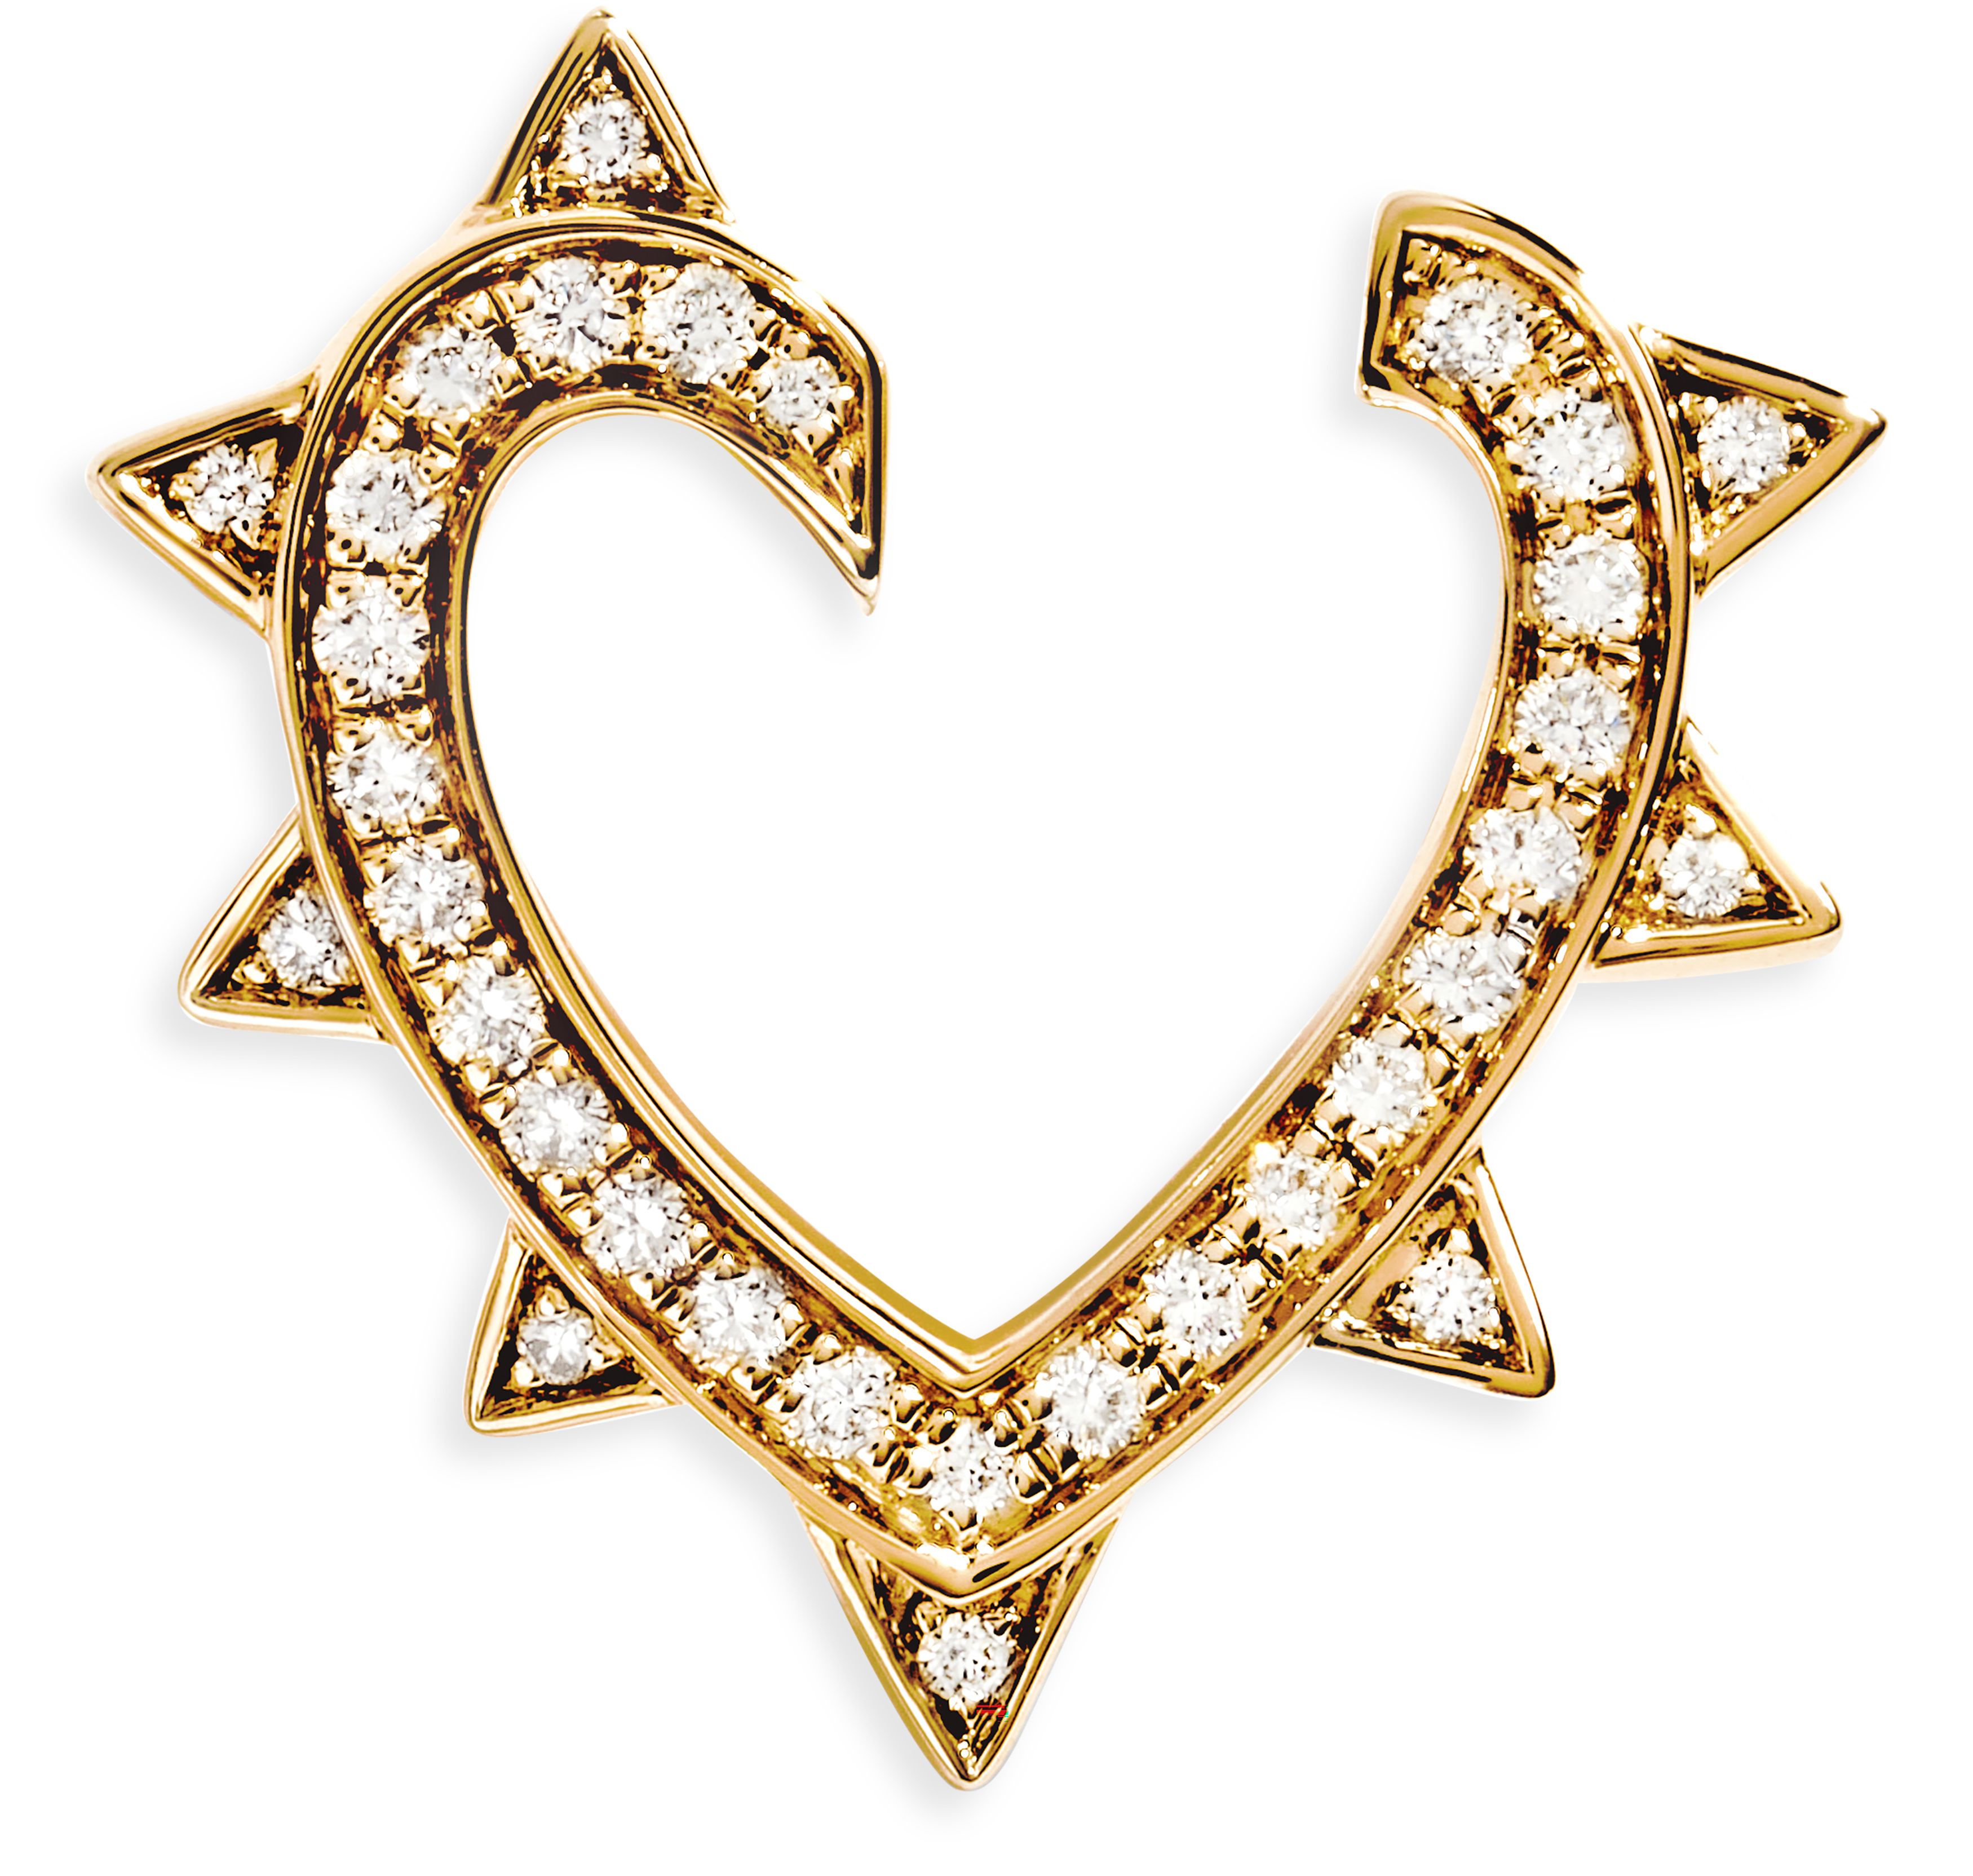  Caur Rockaway yellow gold and diamond earring